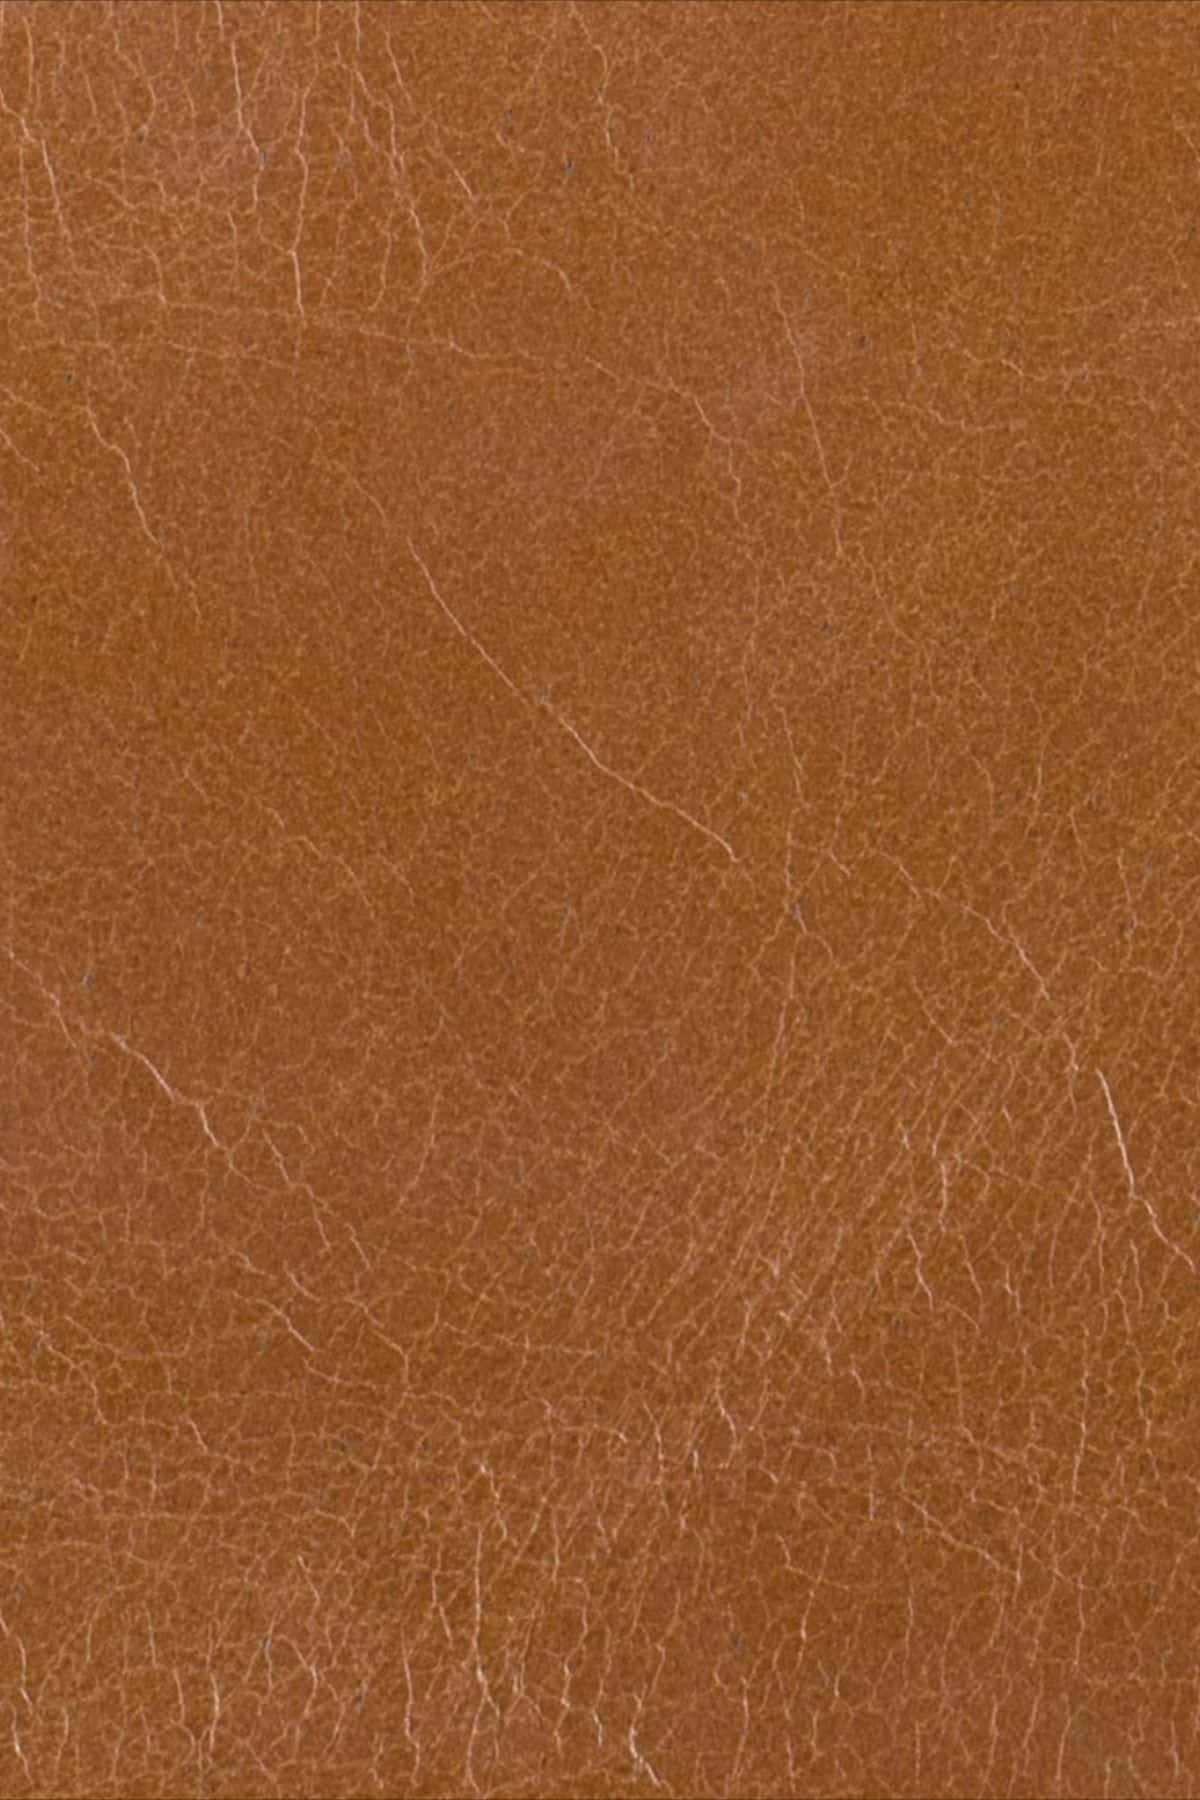 Leather Texture Brown Portrait Picture